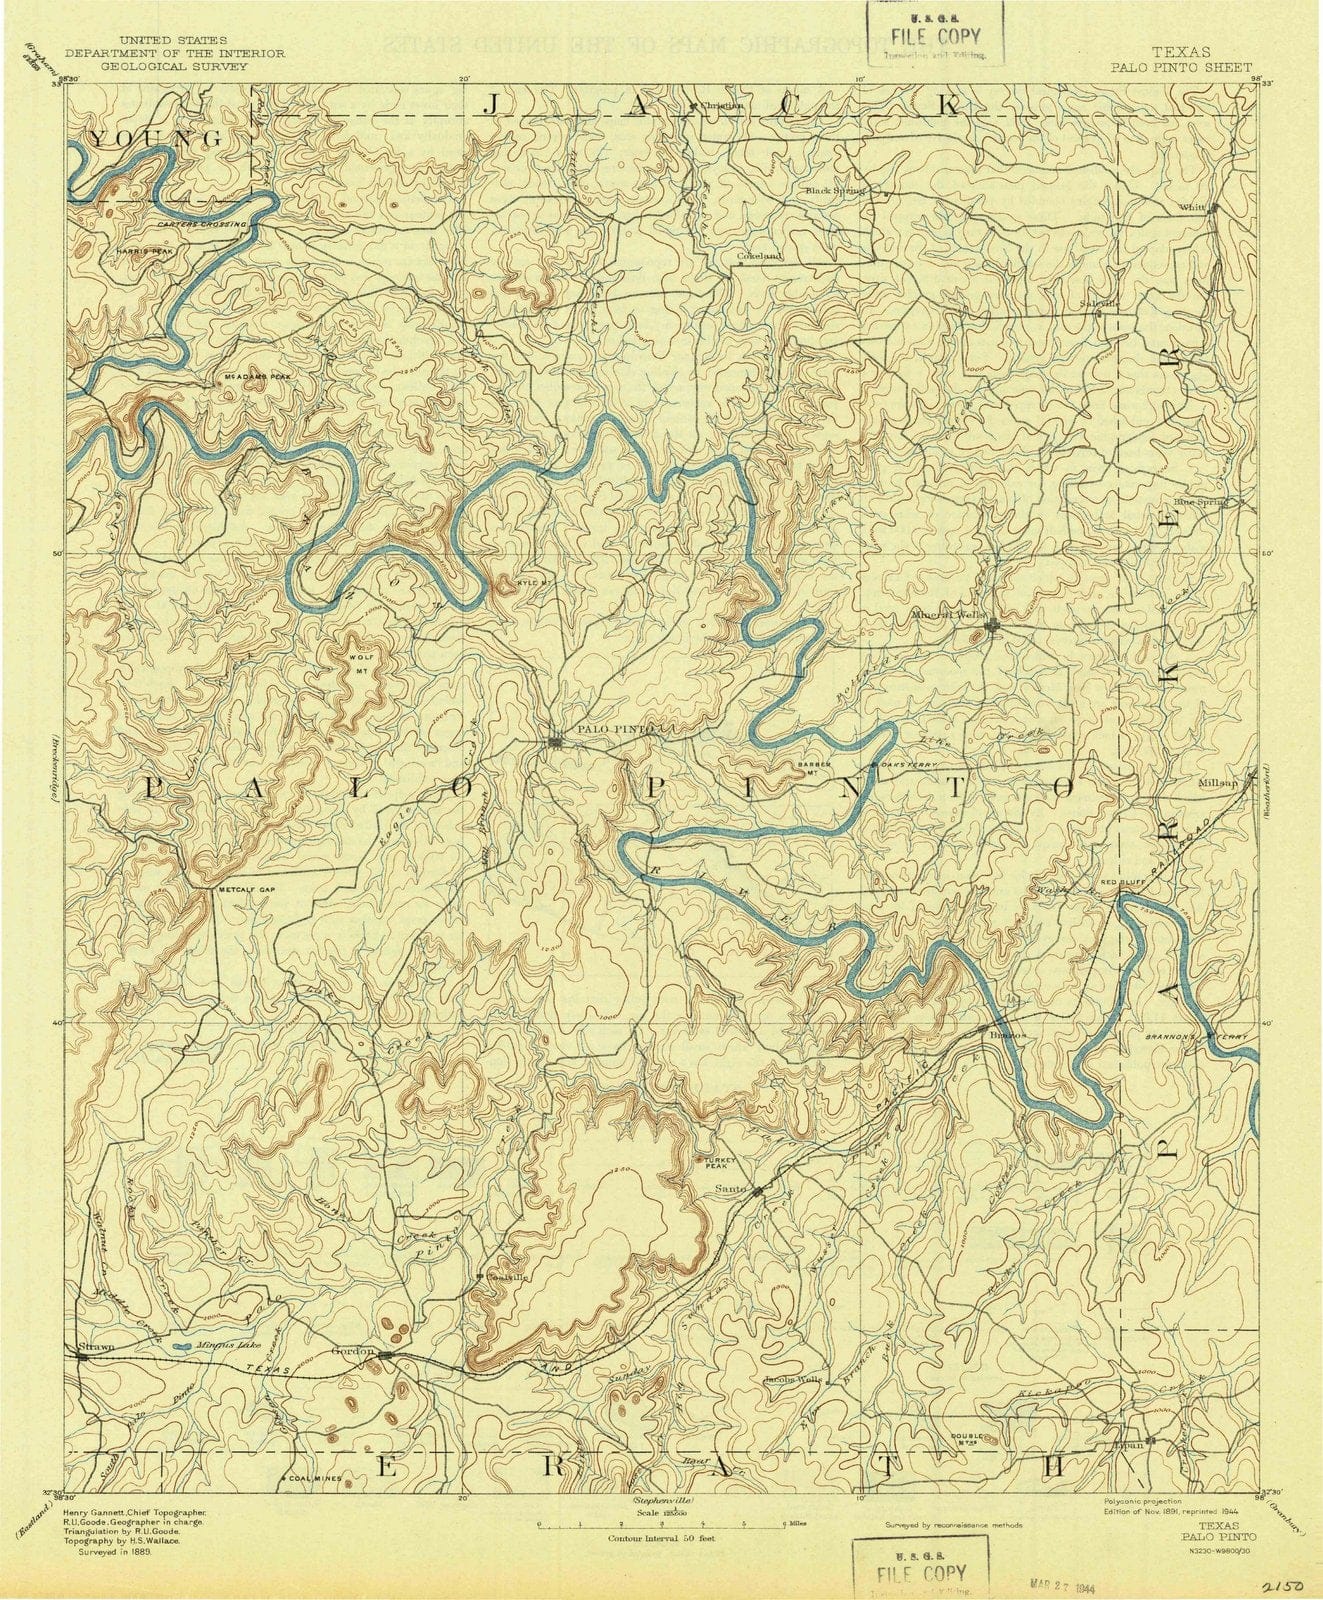 1891 Balance of Palo Pinto County, TX - Texas - USGS Topographic Map